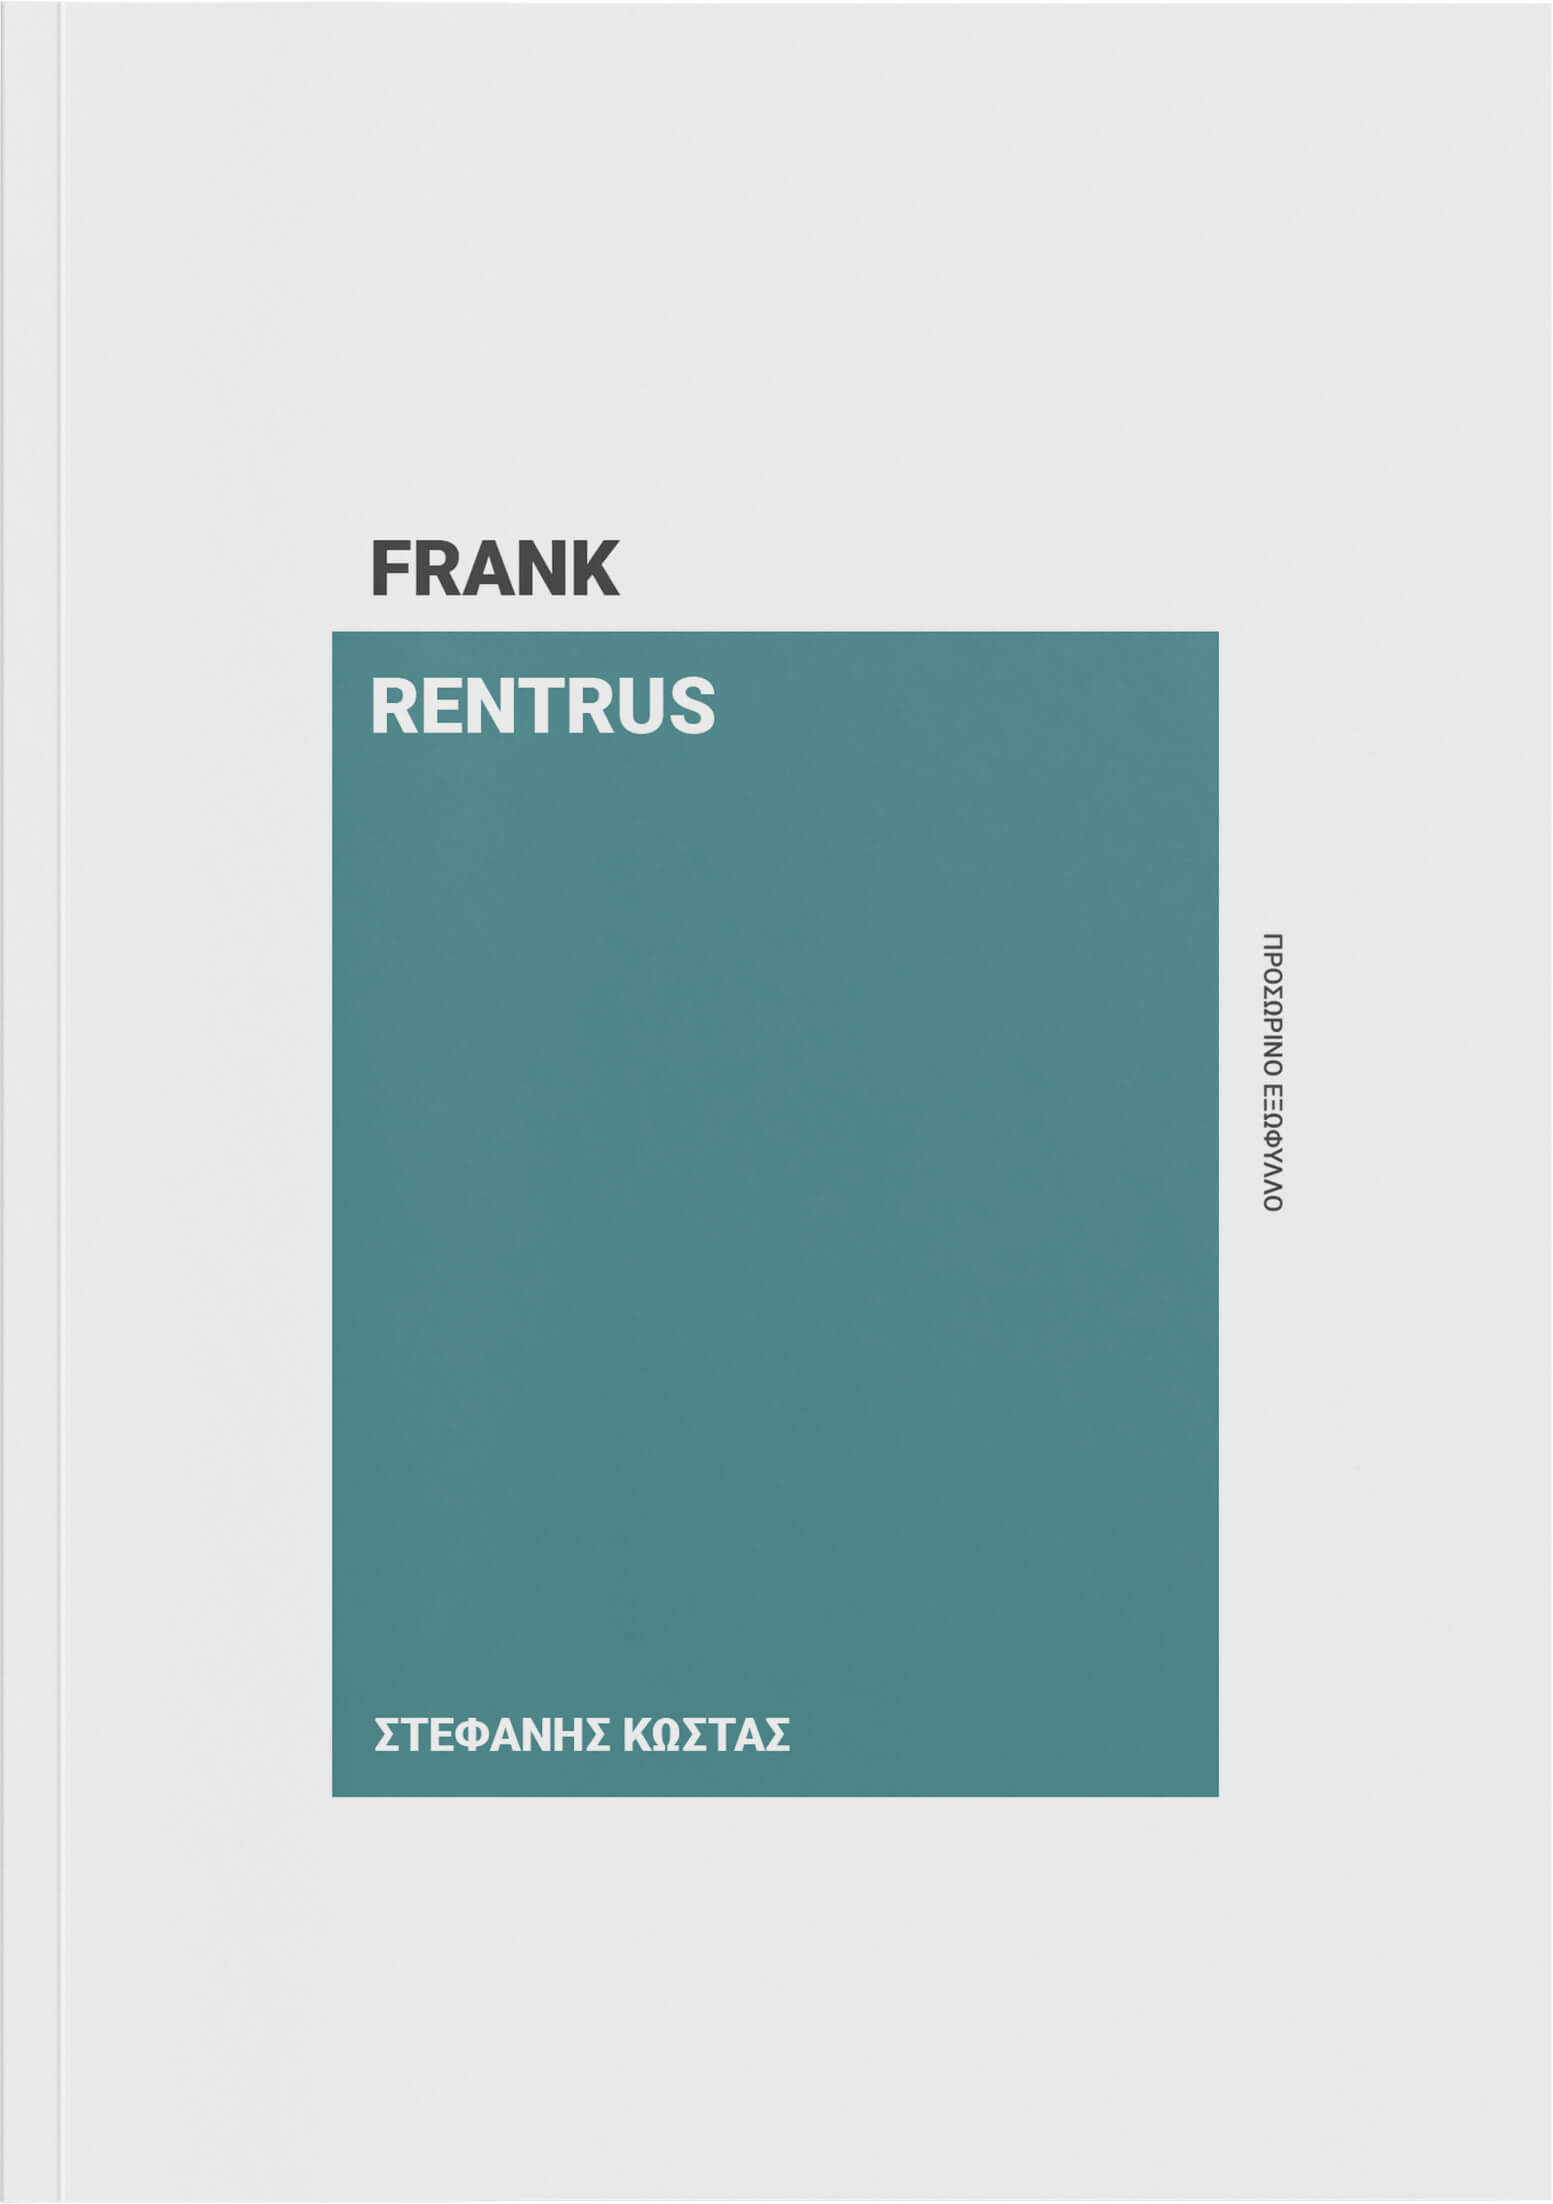 Frank Rentrus